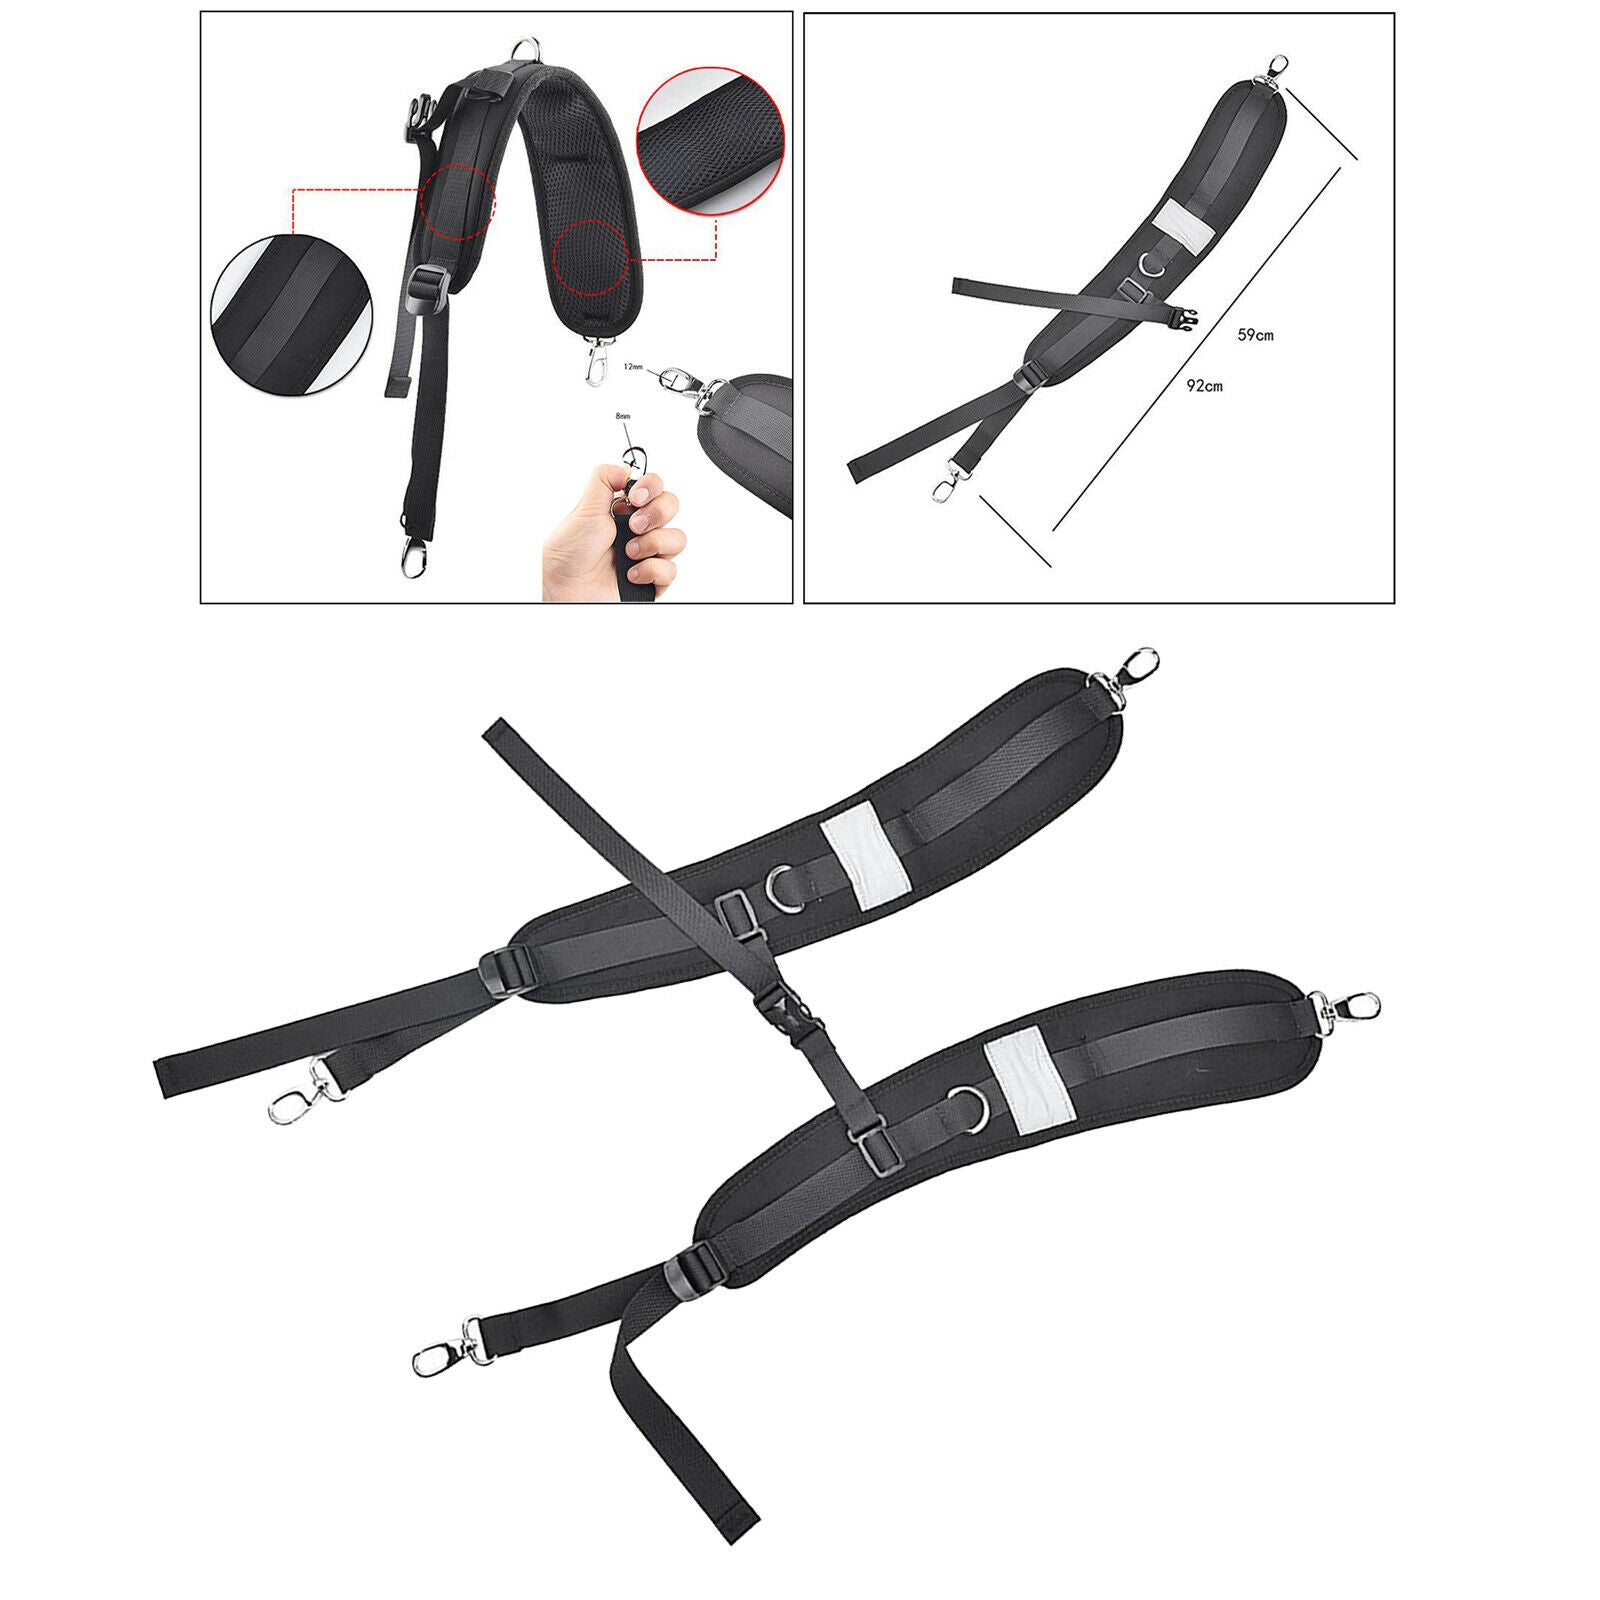 Replacement Backpack Shoulder Straps Adjustable With Hooks Reflective Strip